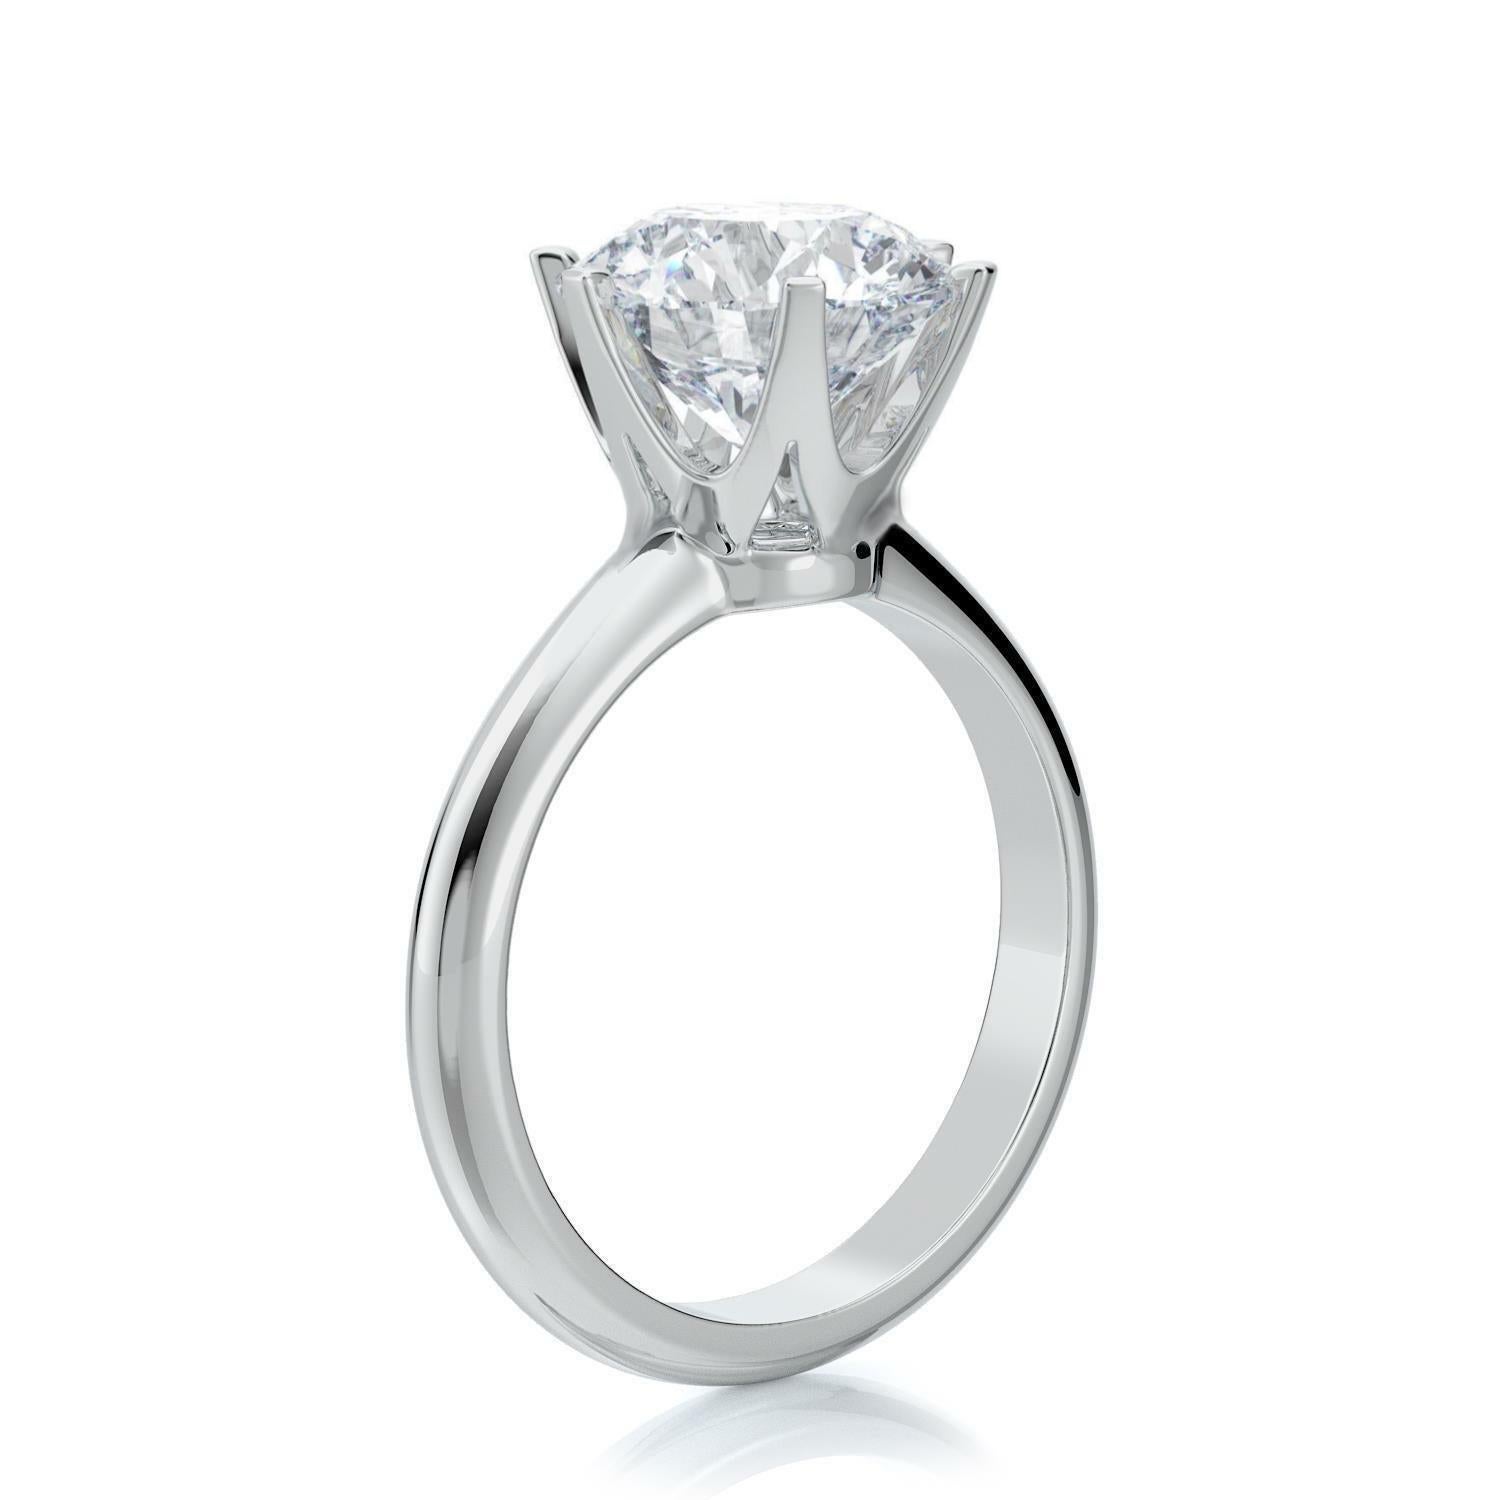 Gia certified diamond ring
Carat 2.20
Color E
Clarity VS1
Cut Triple Excellent
None Fluorescence 